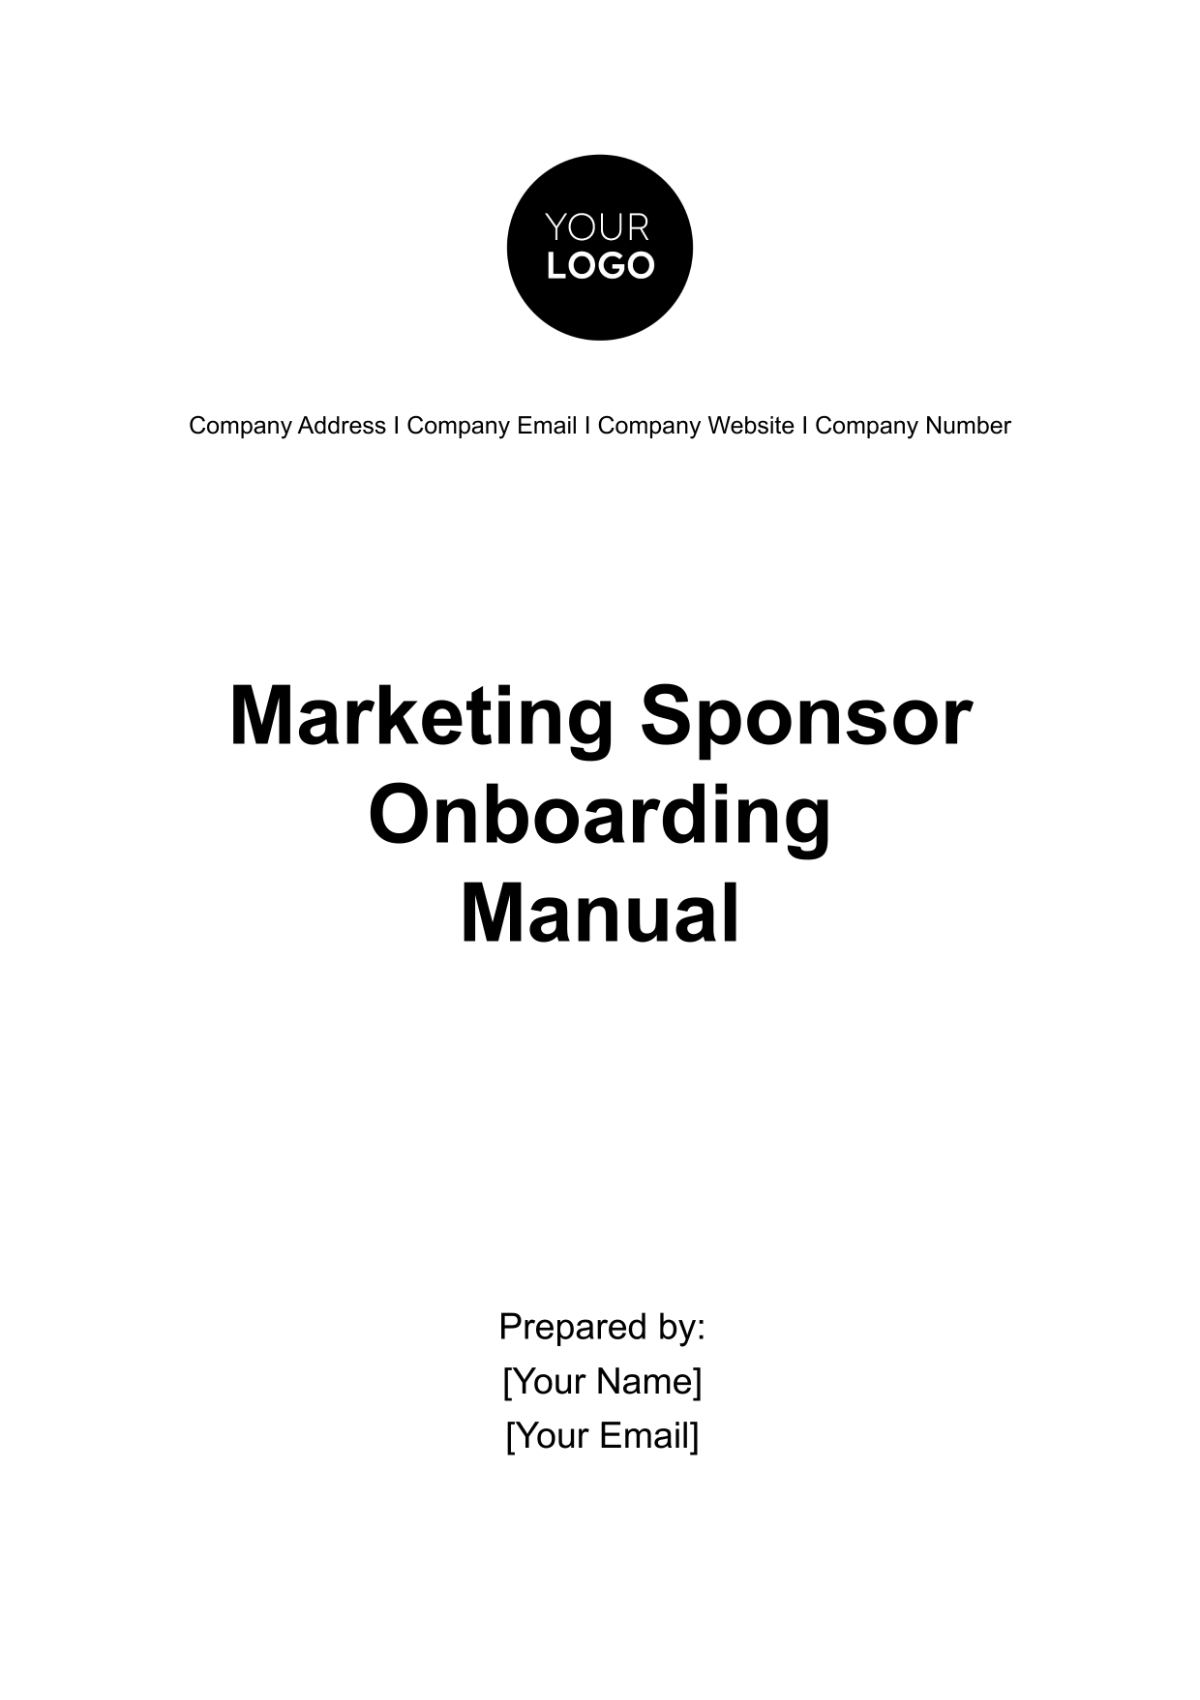 Free Marketing Sponsor Onboarding Manual Template